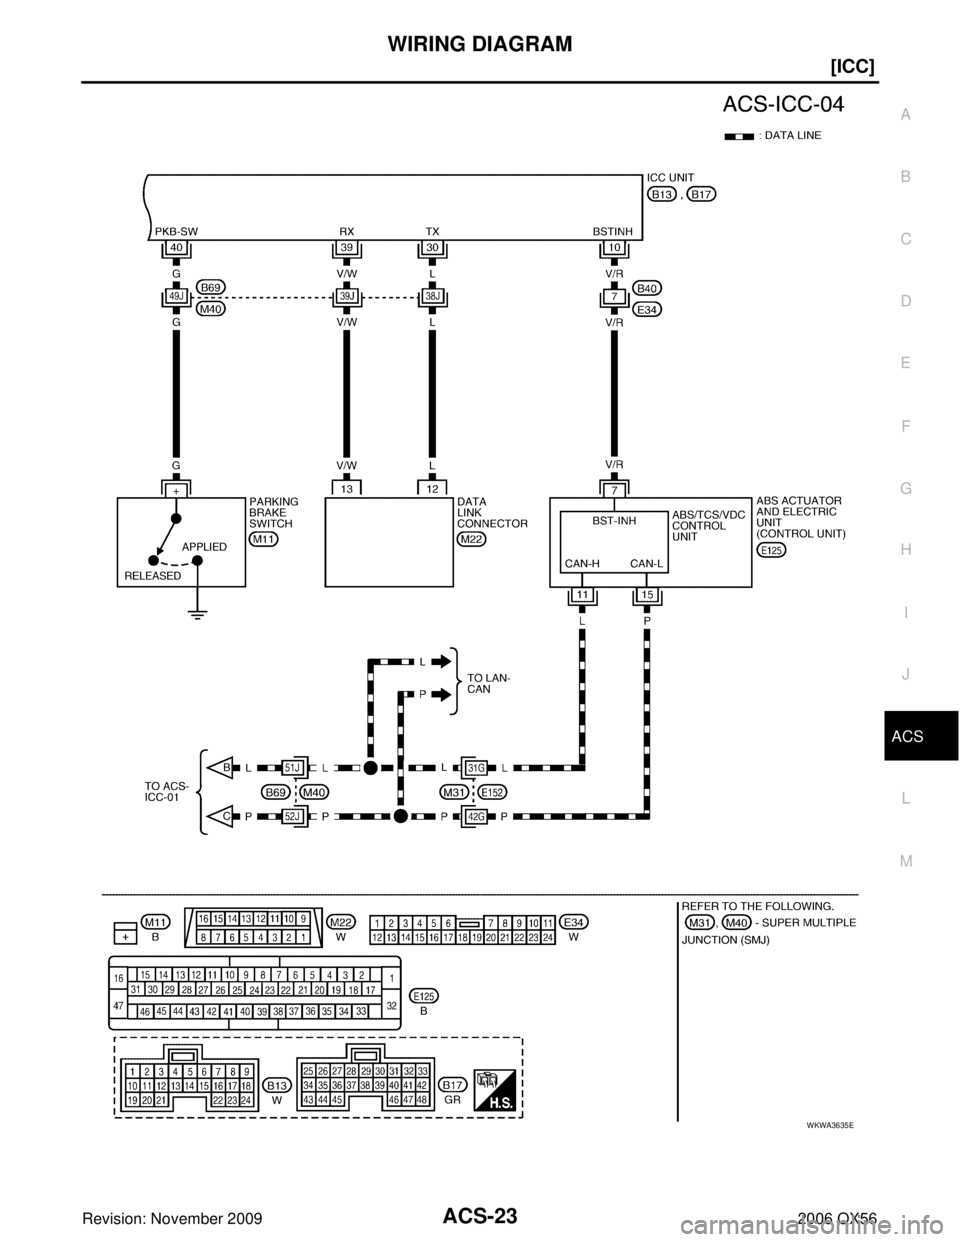 INFINITI QX56 2006  Factory Owners Guide WIRING DIAGRAMACS-23
[ICC]
C
DE
F
G H
I
J
L
M A
B
ACS
Revision: November 2009 2006 QX56
WKWA3635E 